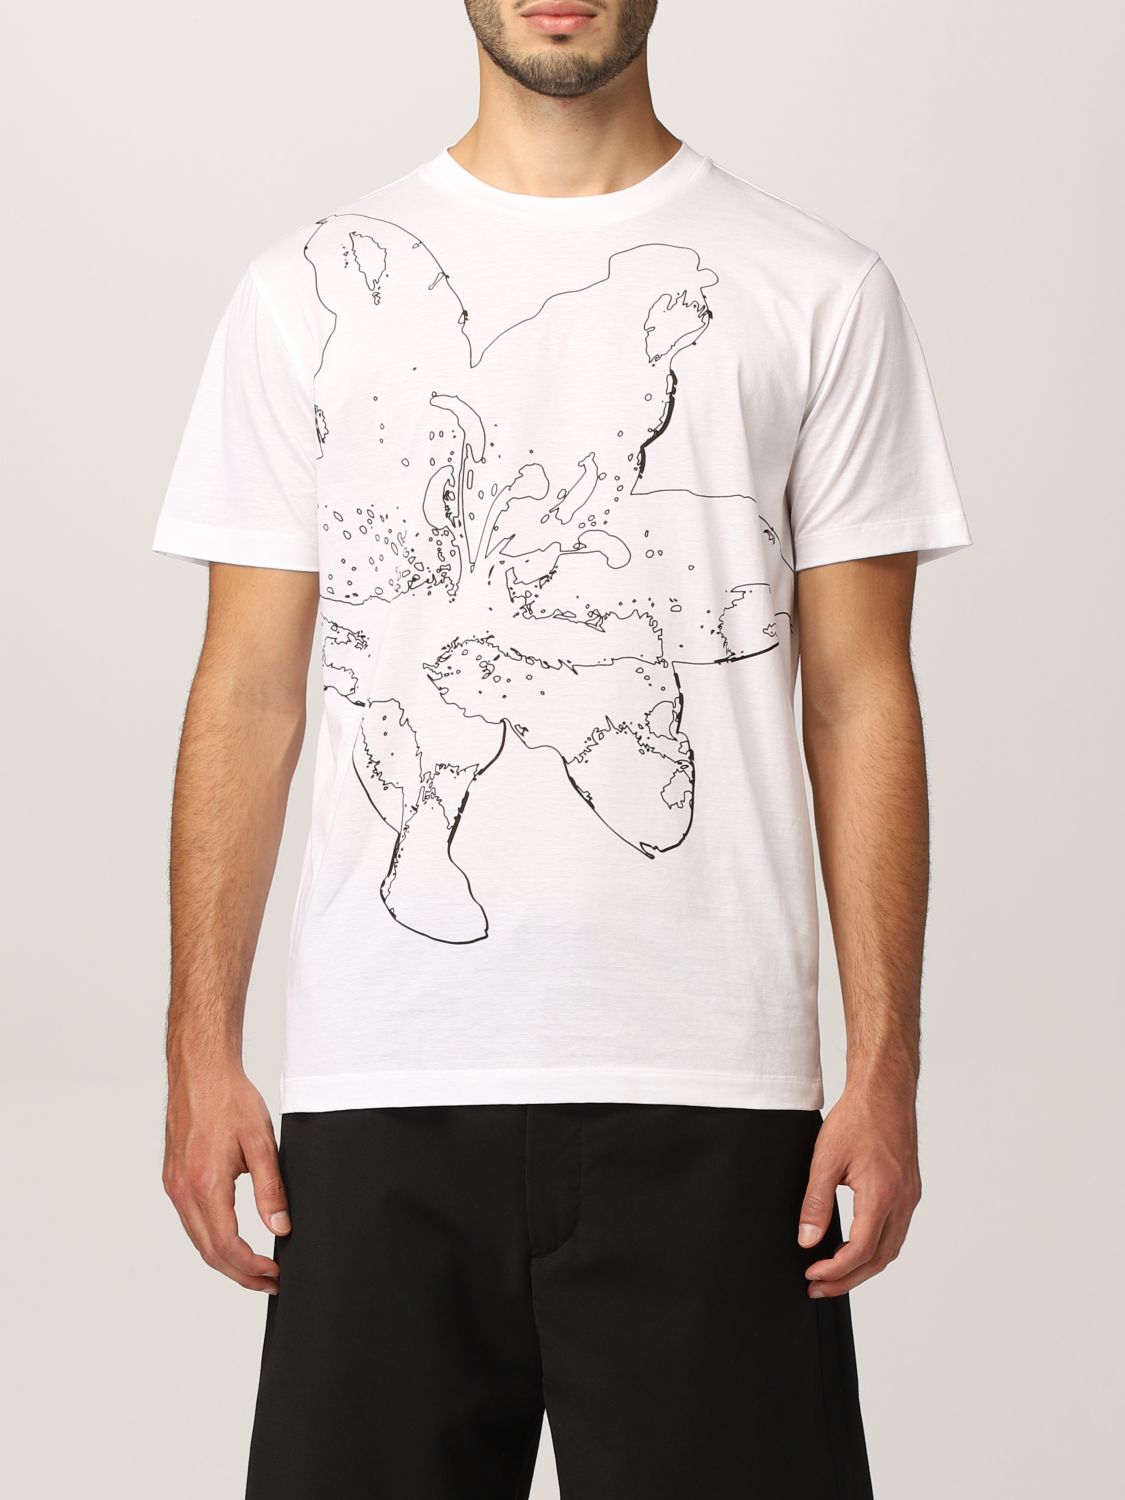 Camiseta Les Hommes: Camiseta hombre Les Hommes blanco 1